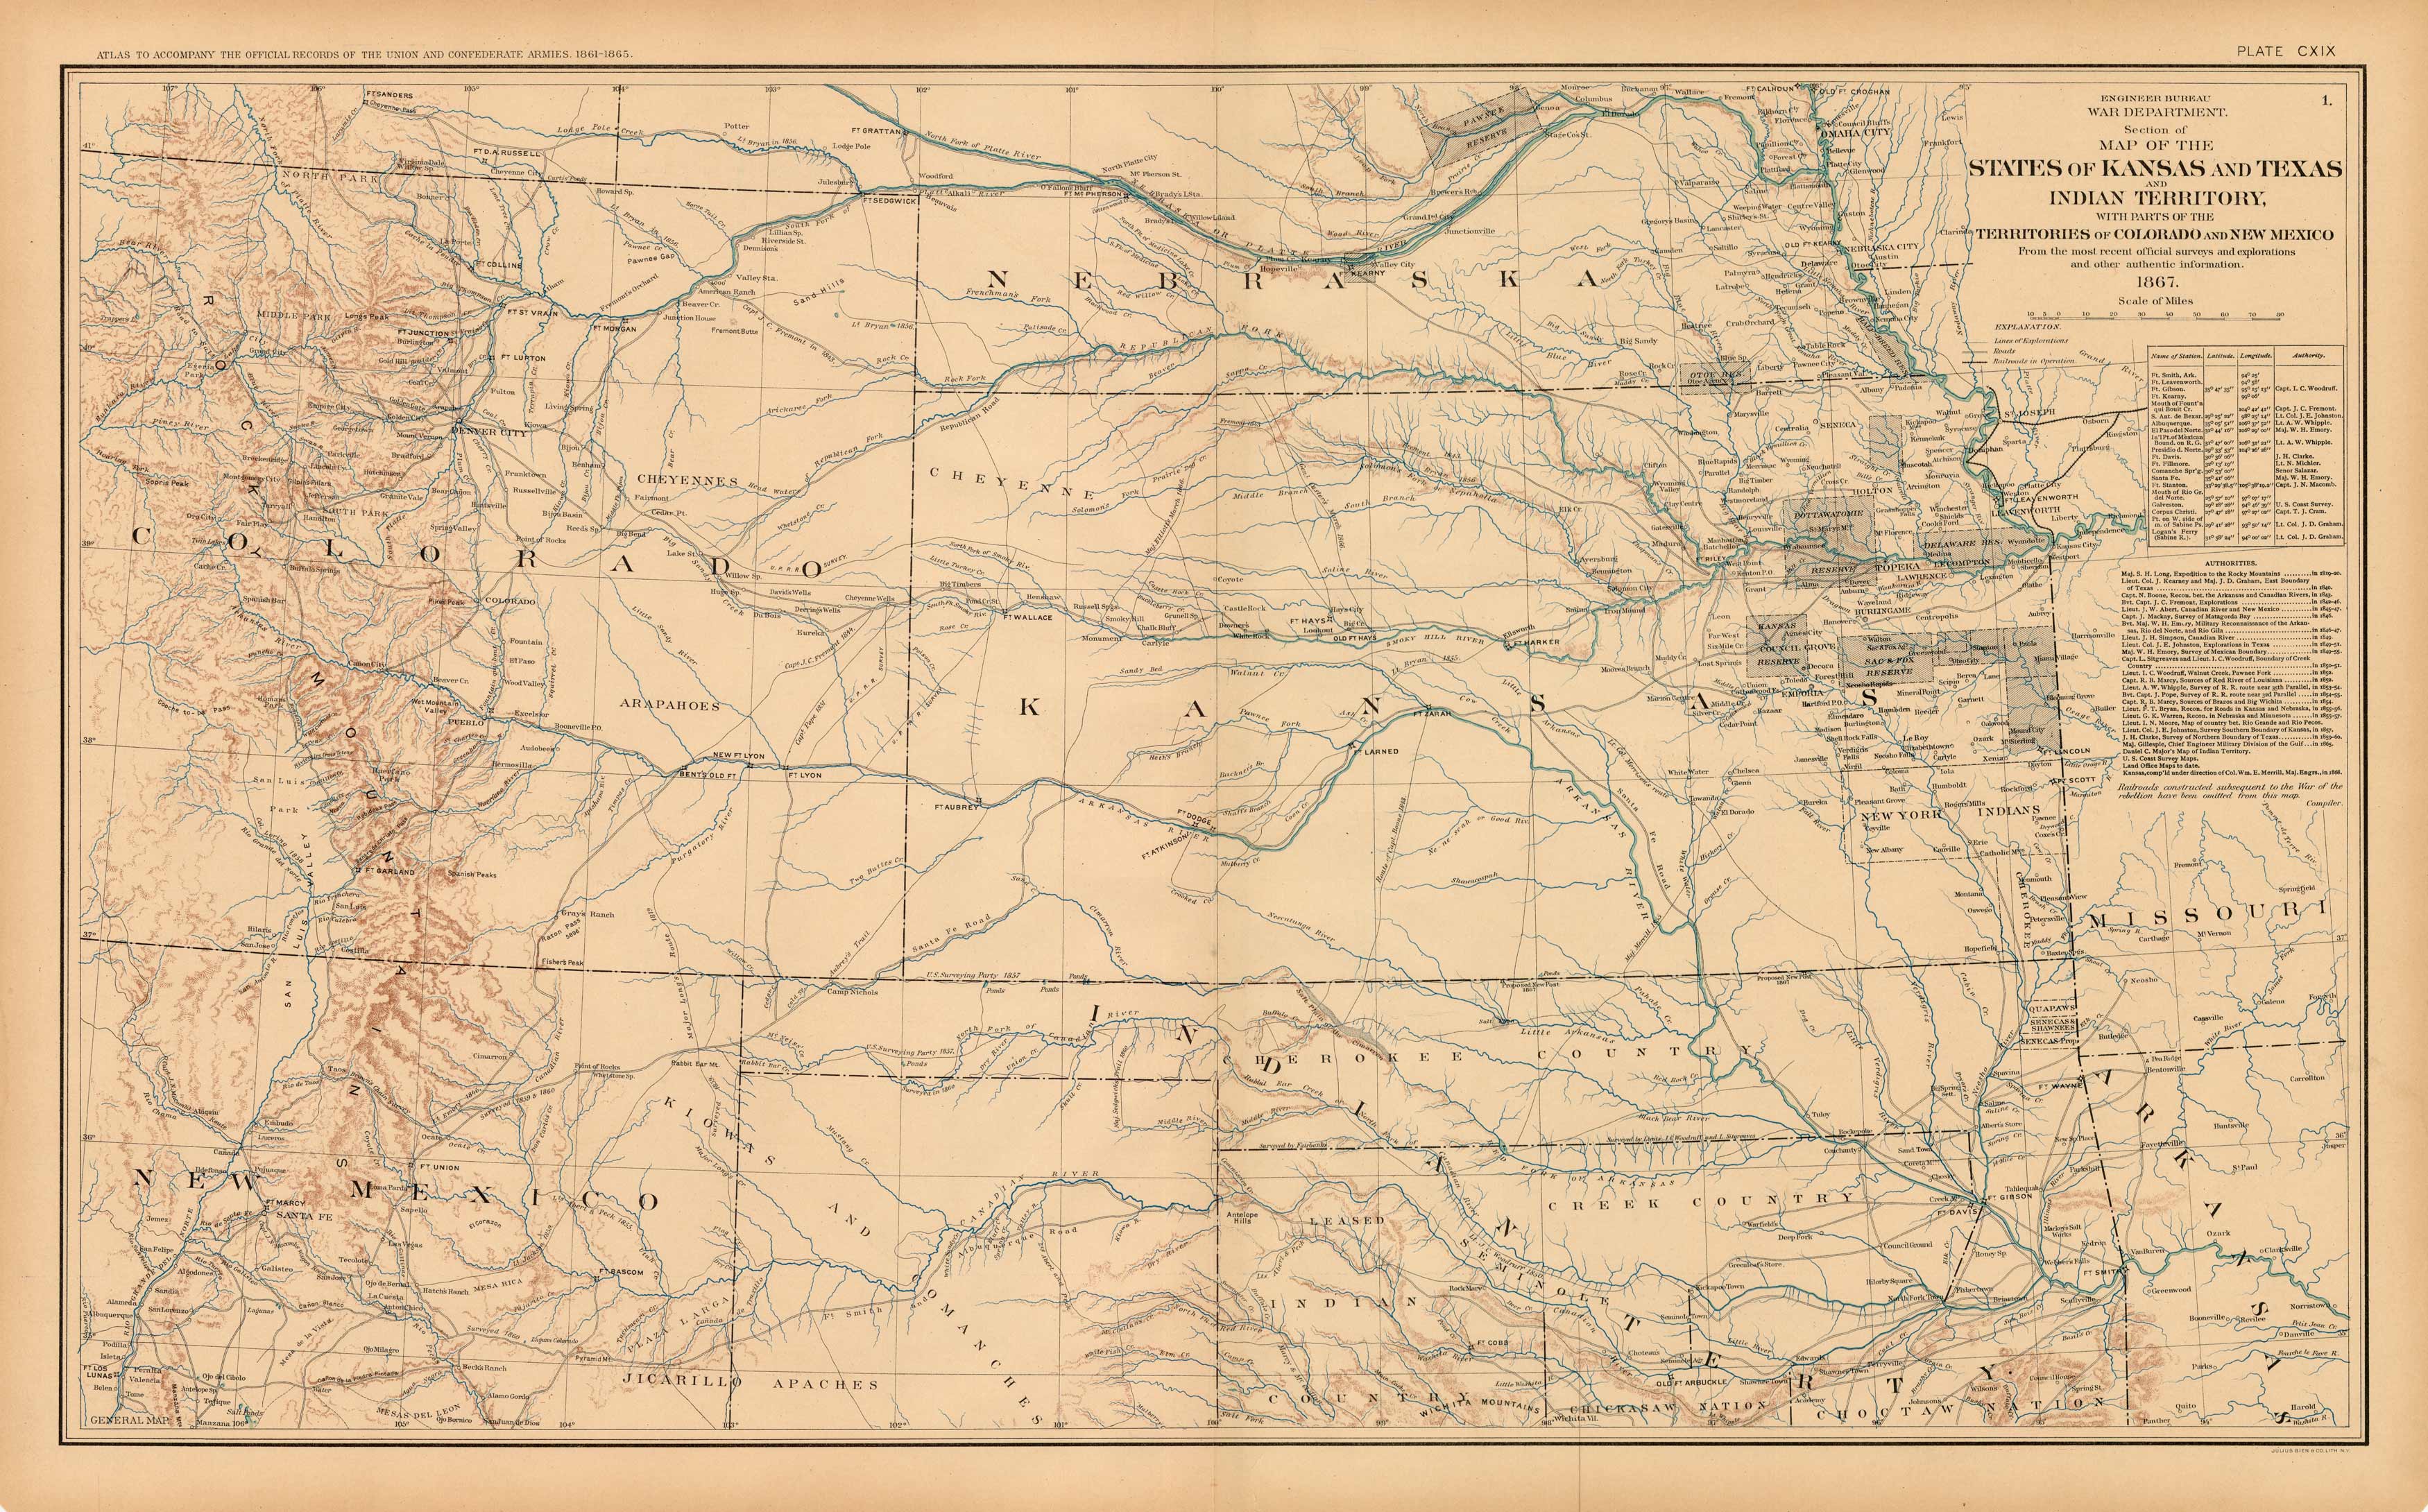 Civil War Atlas; Plate 119; Map of the States of Kansas